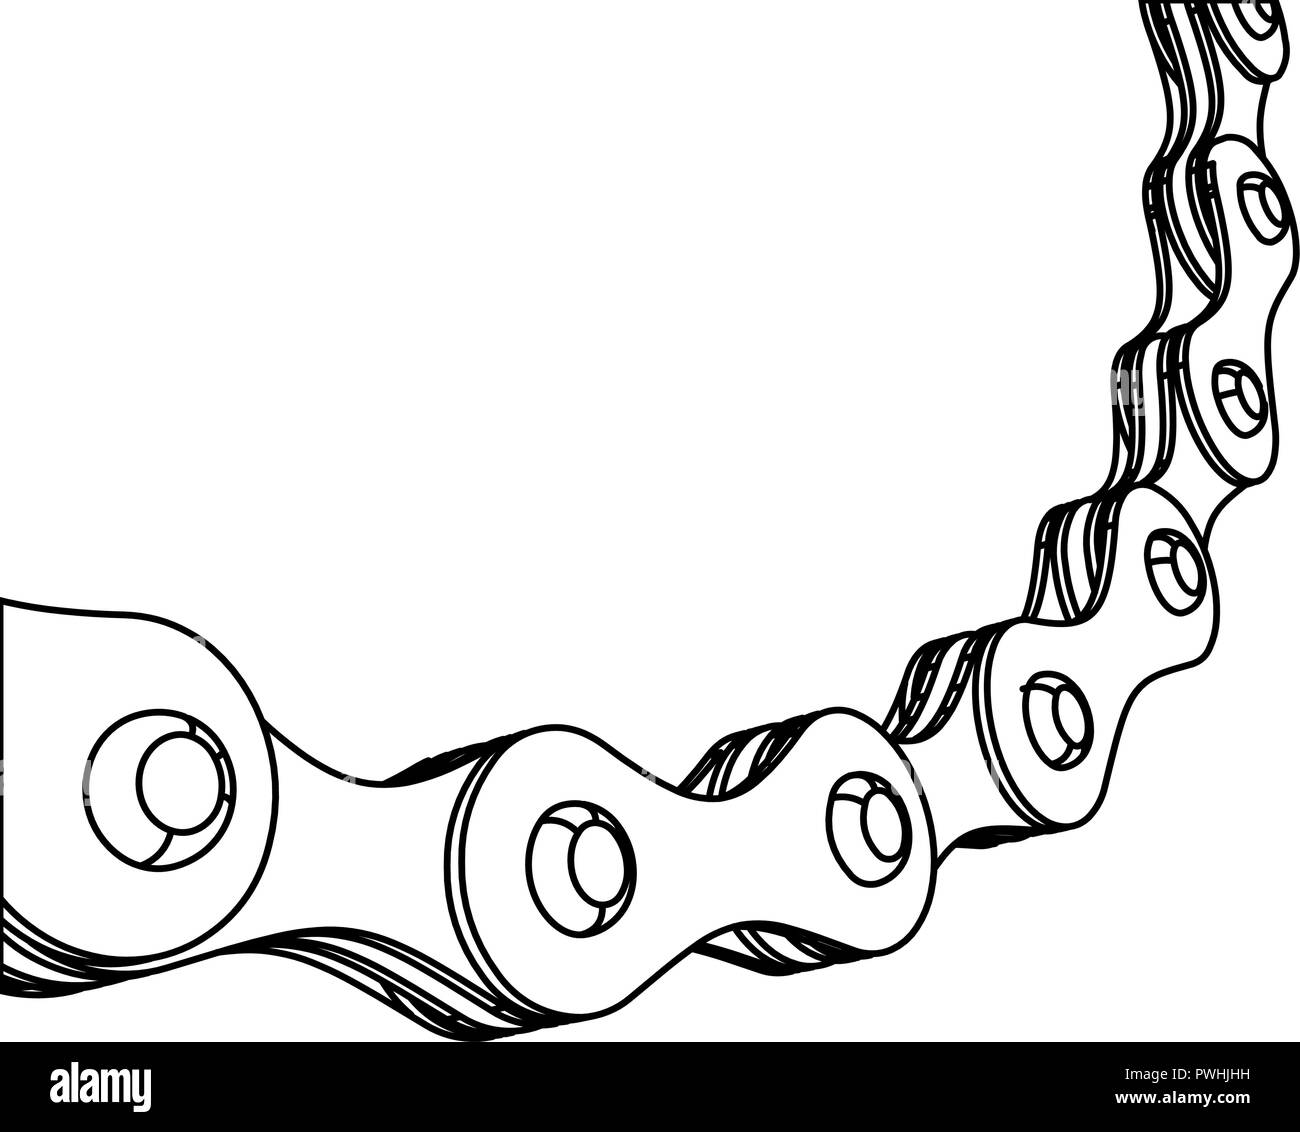 Bike Chain Drawing Stock Photos & Bike Chain Drawing Stock ...